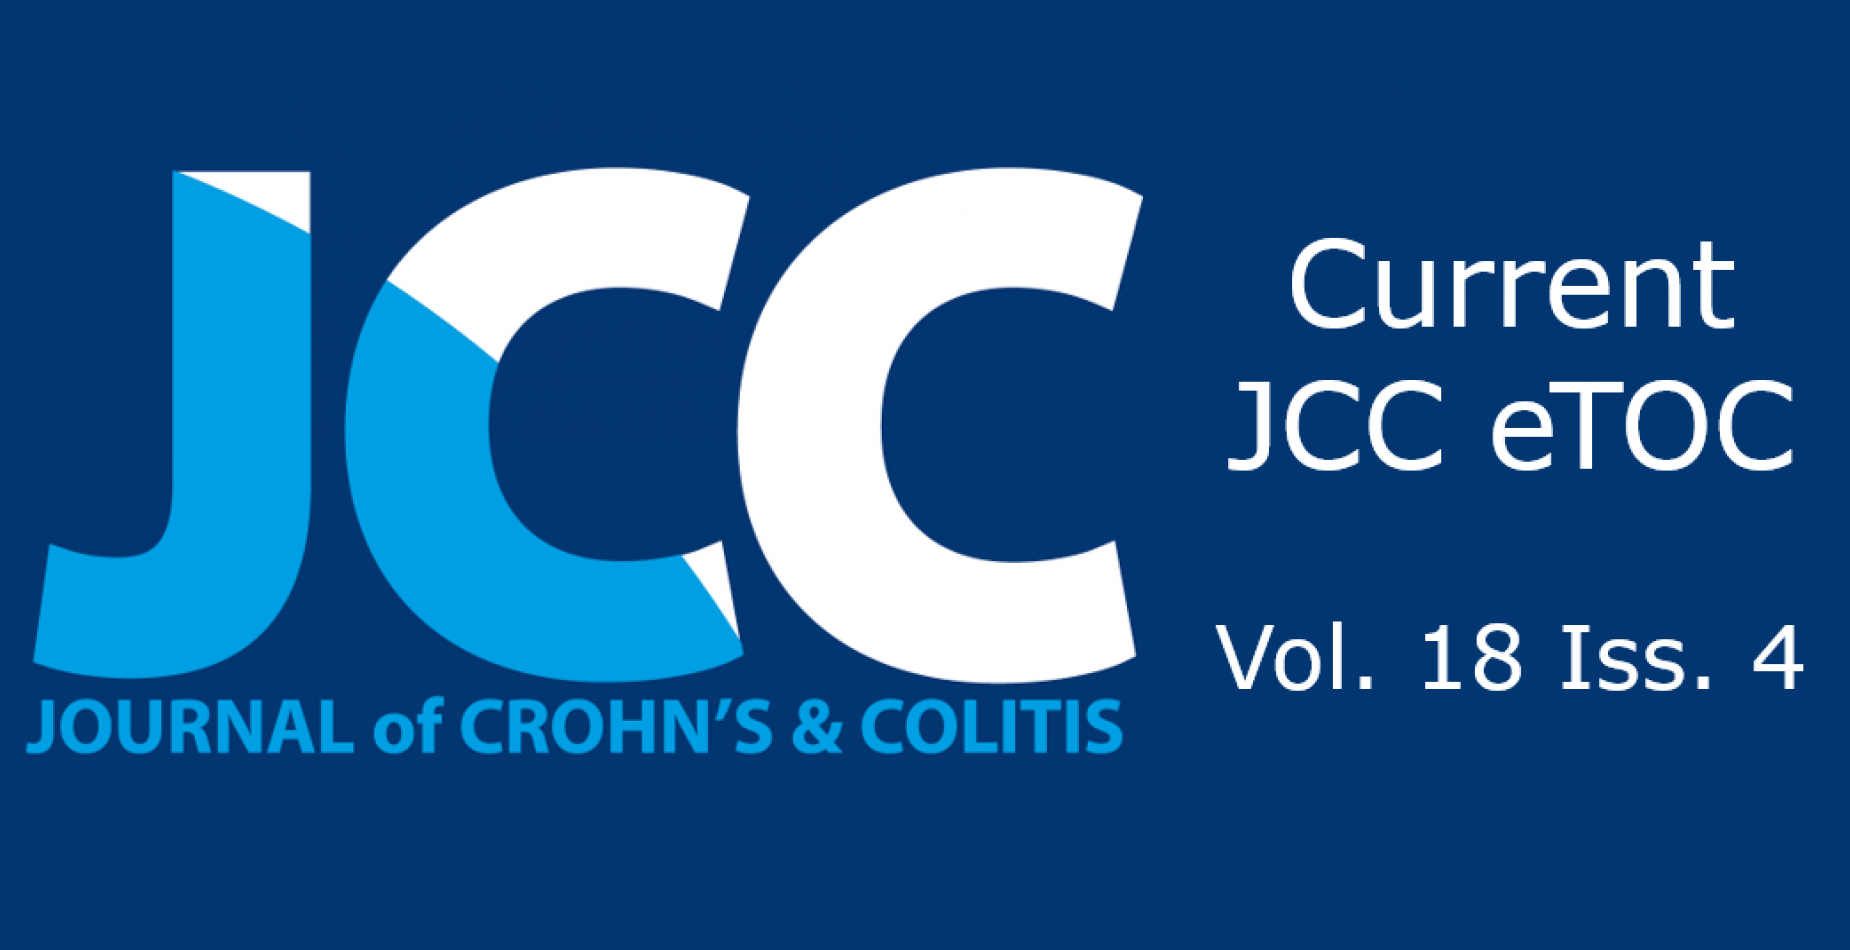 Current JCC eTOC Vol. 18 Iss. 4